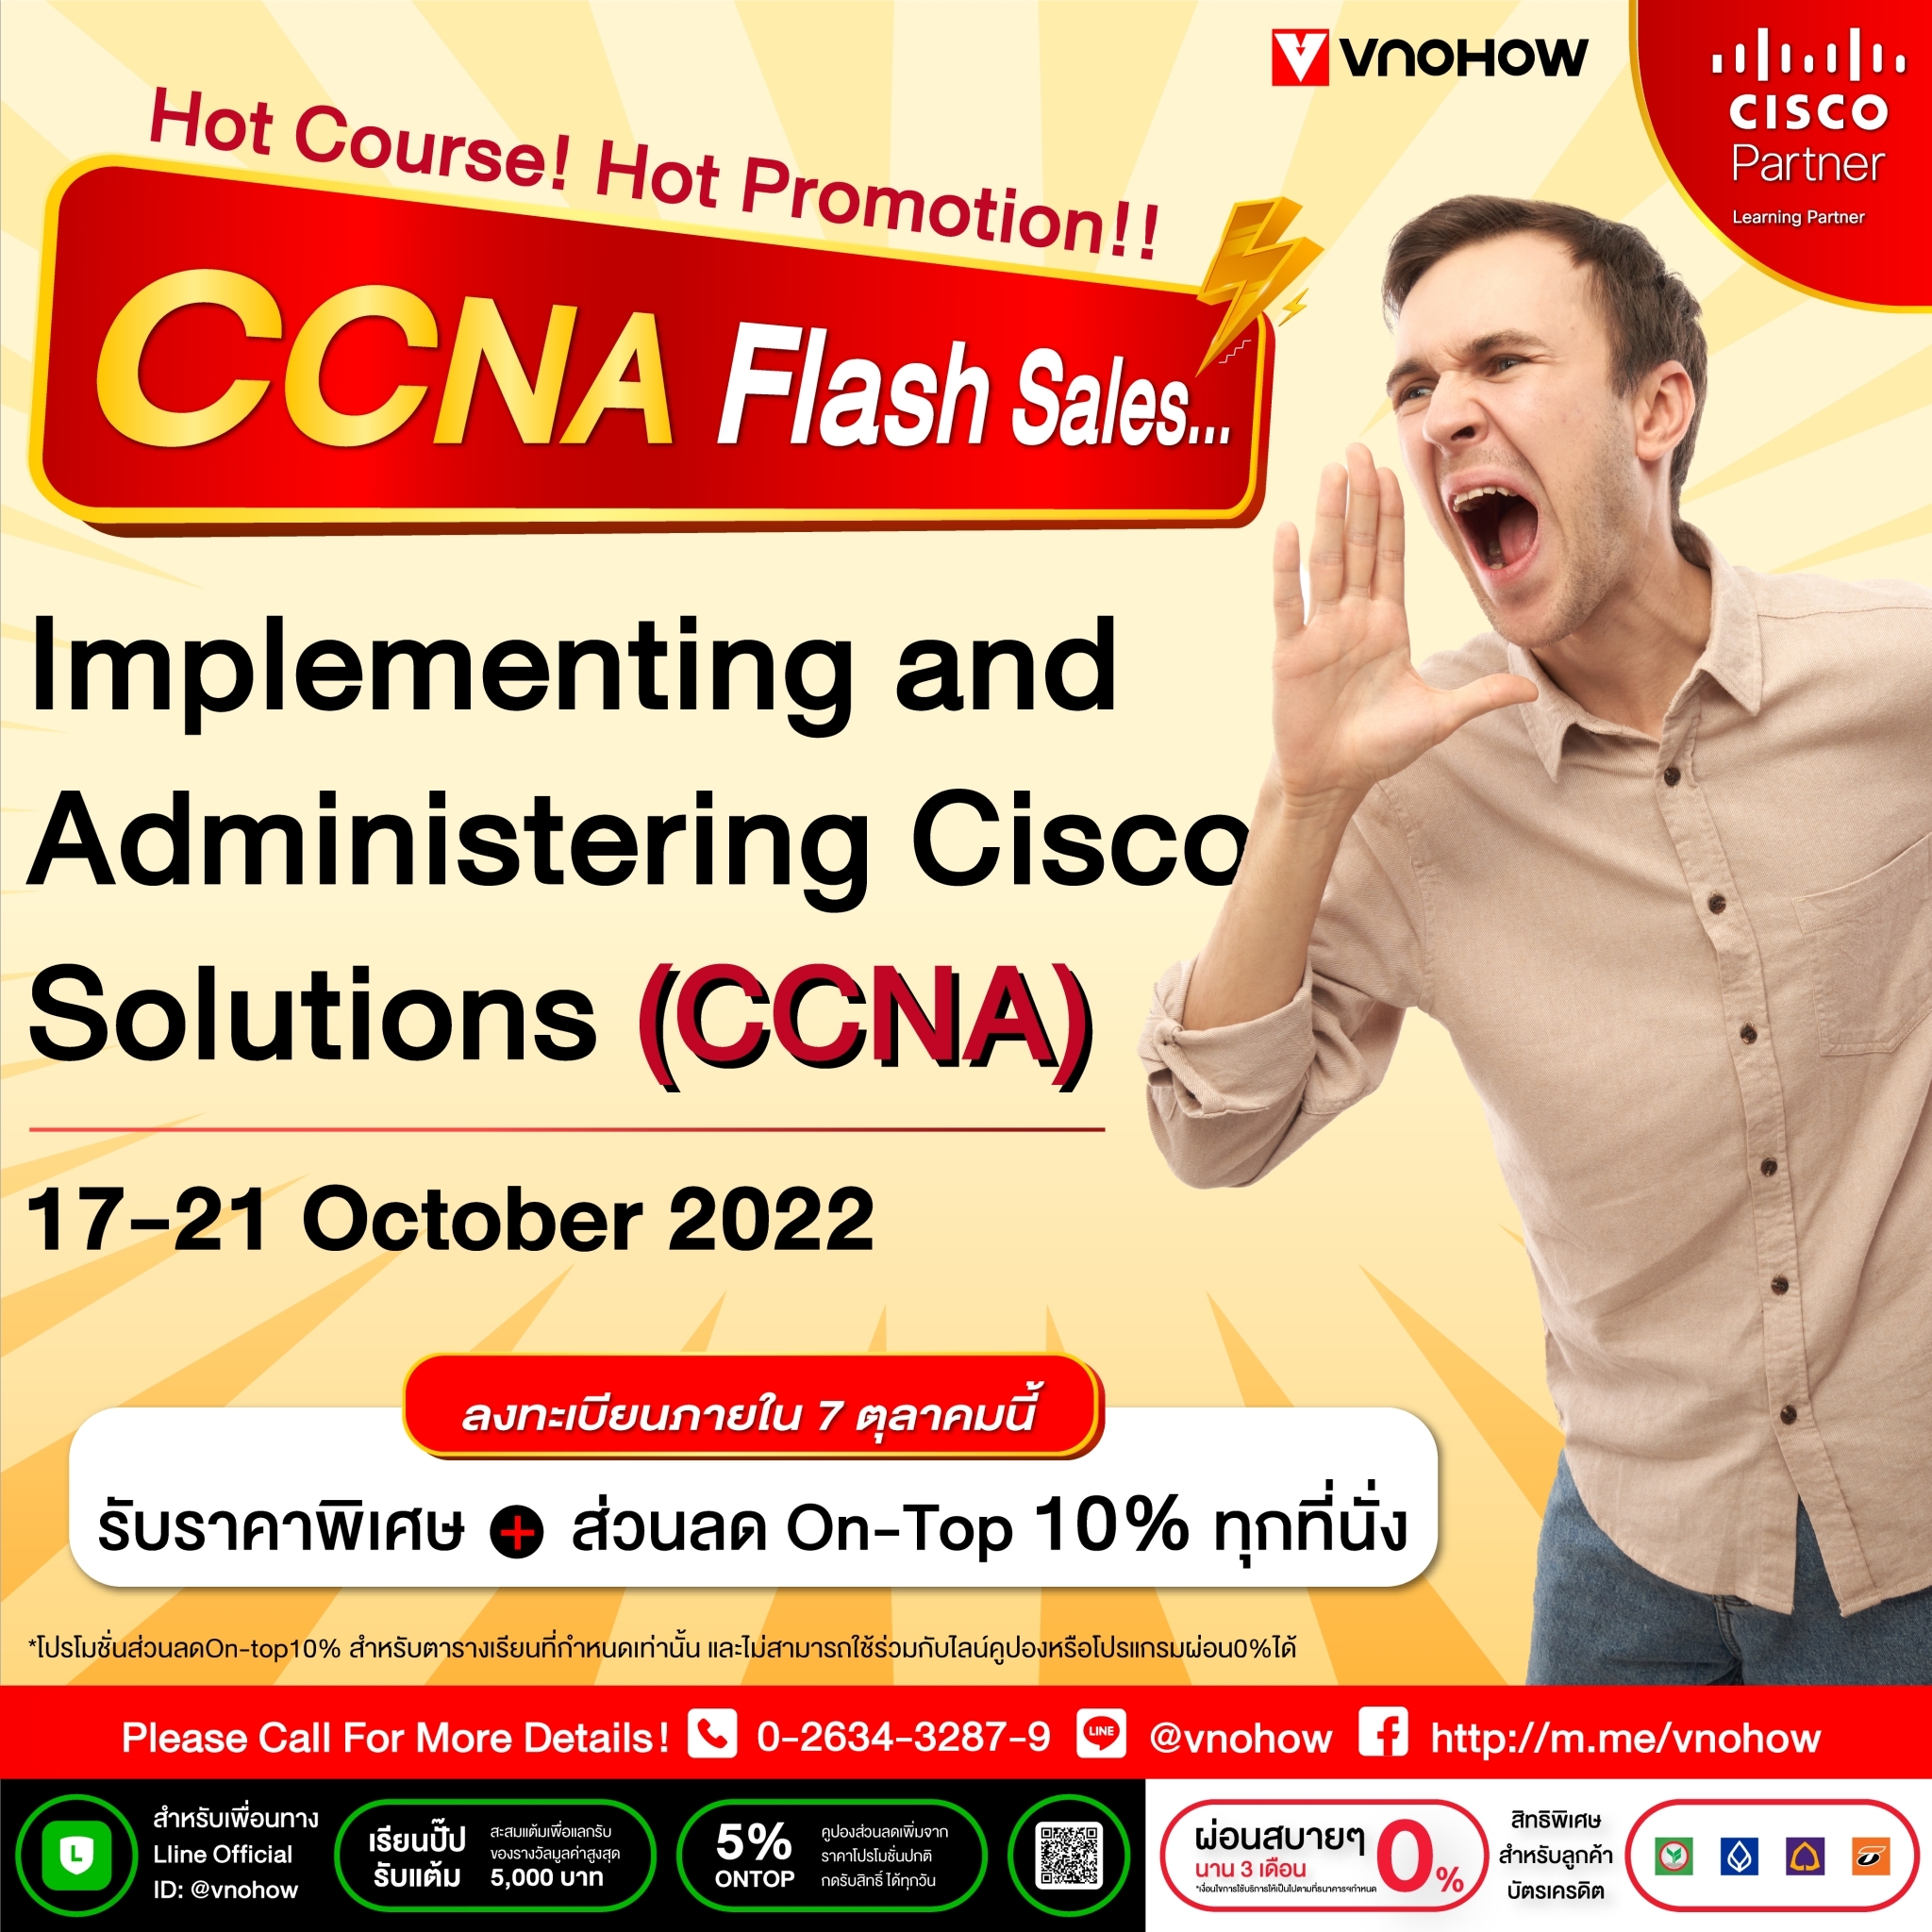 ccna-flash-sales-17-21